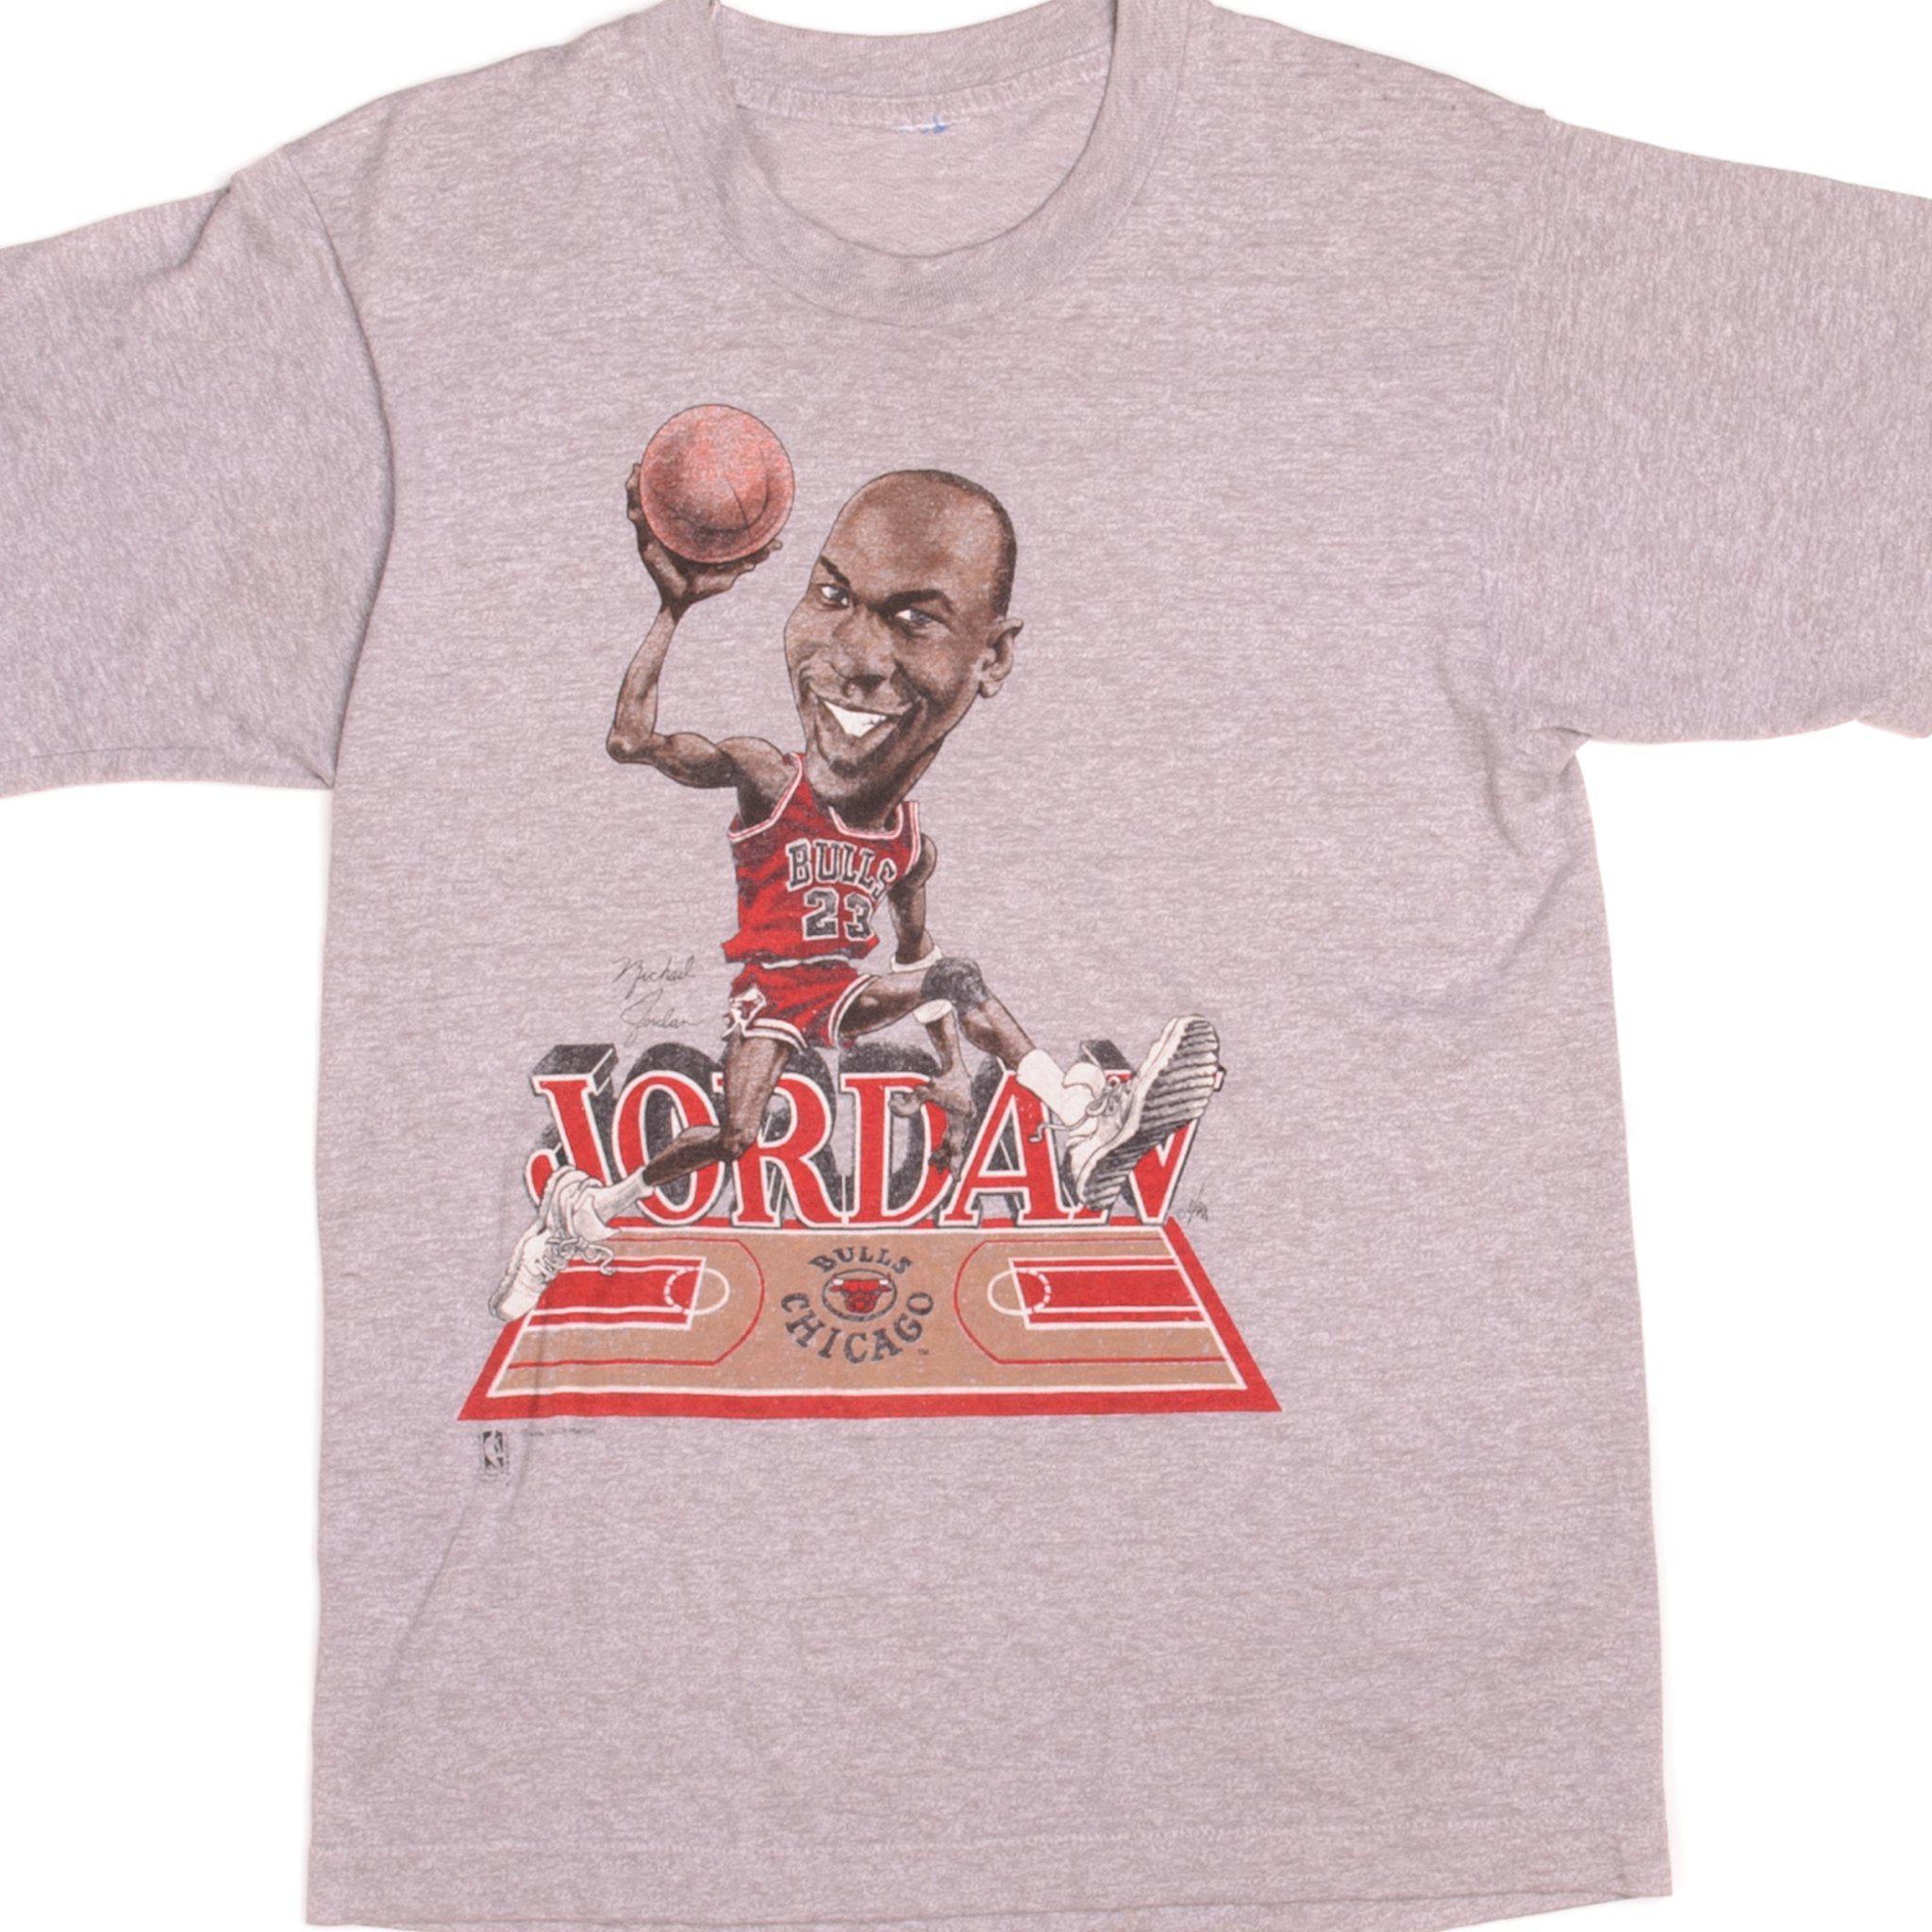 Michael Jordan 6 time NBA Champion All Rings retro shirt, hoodie